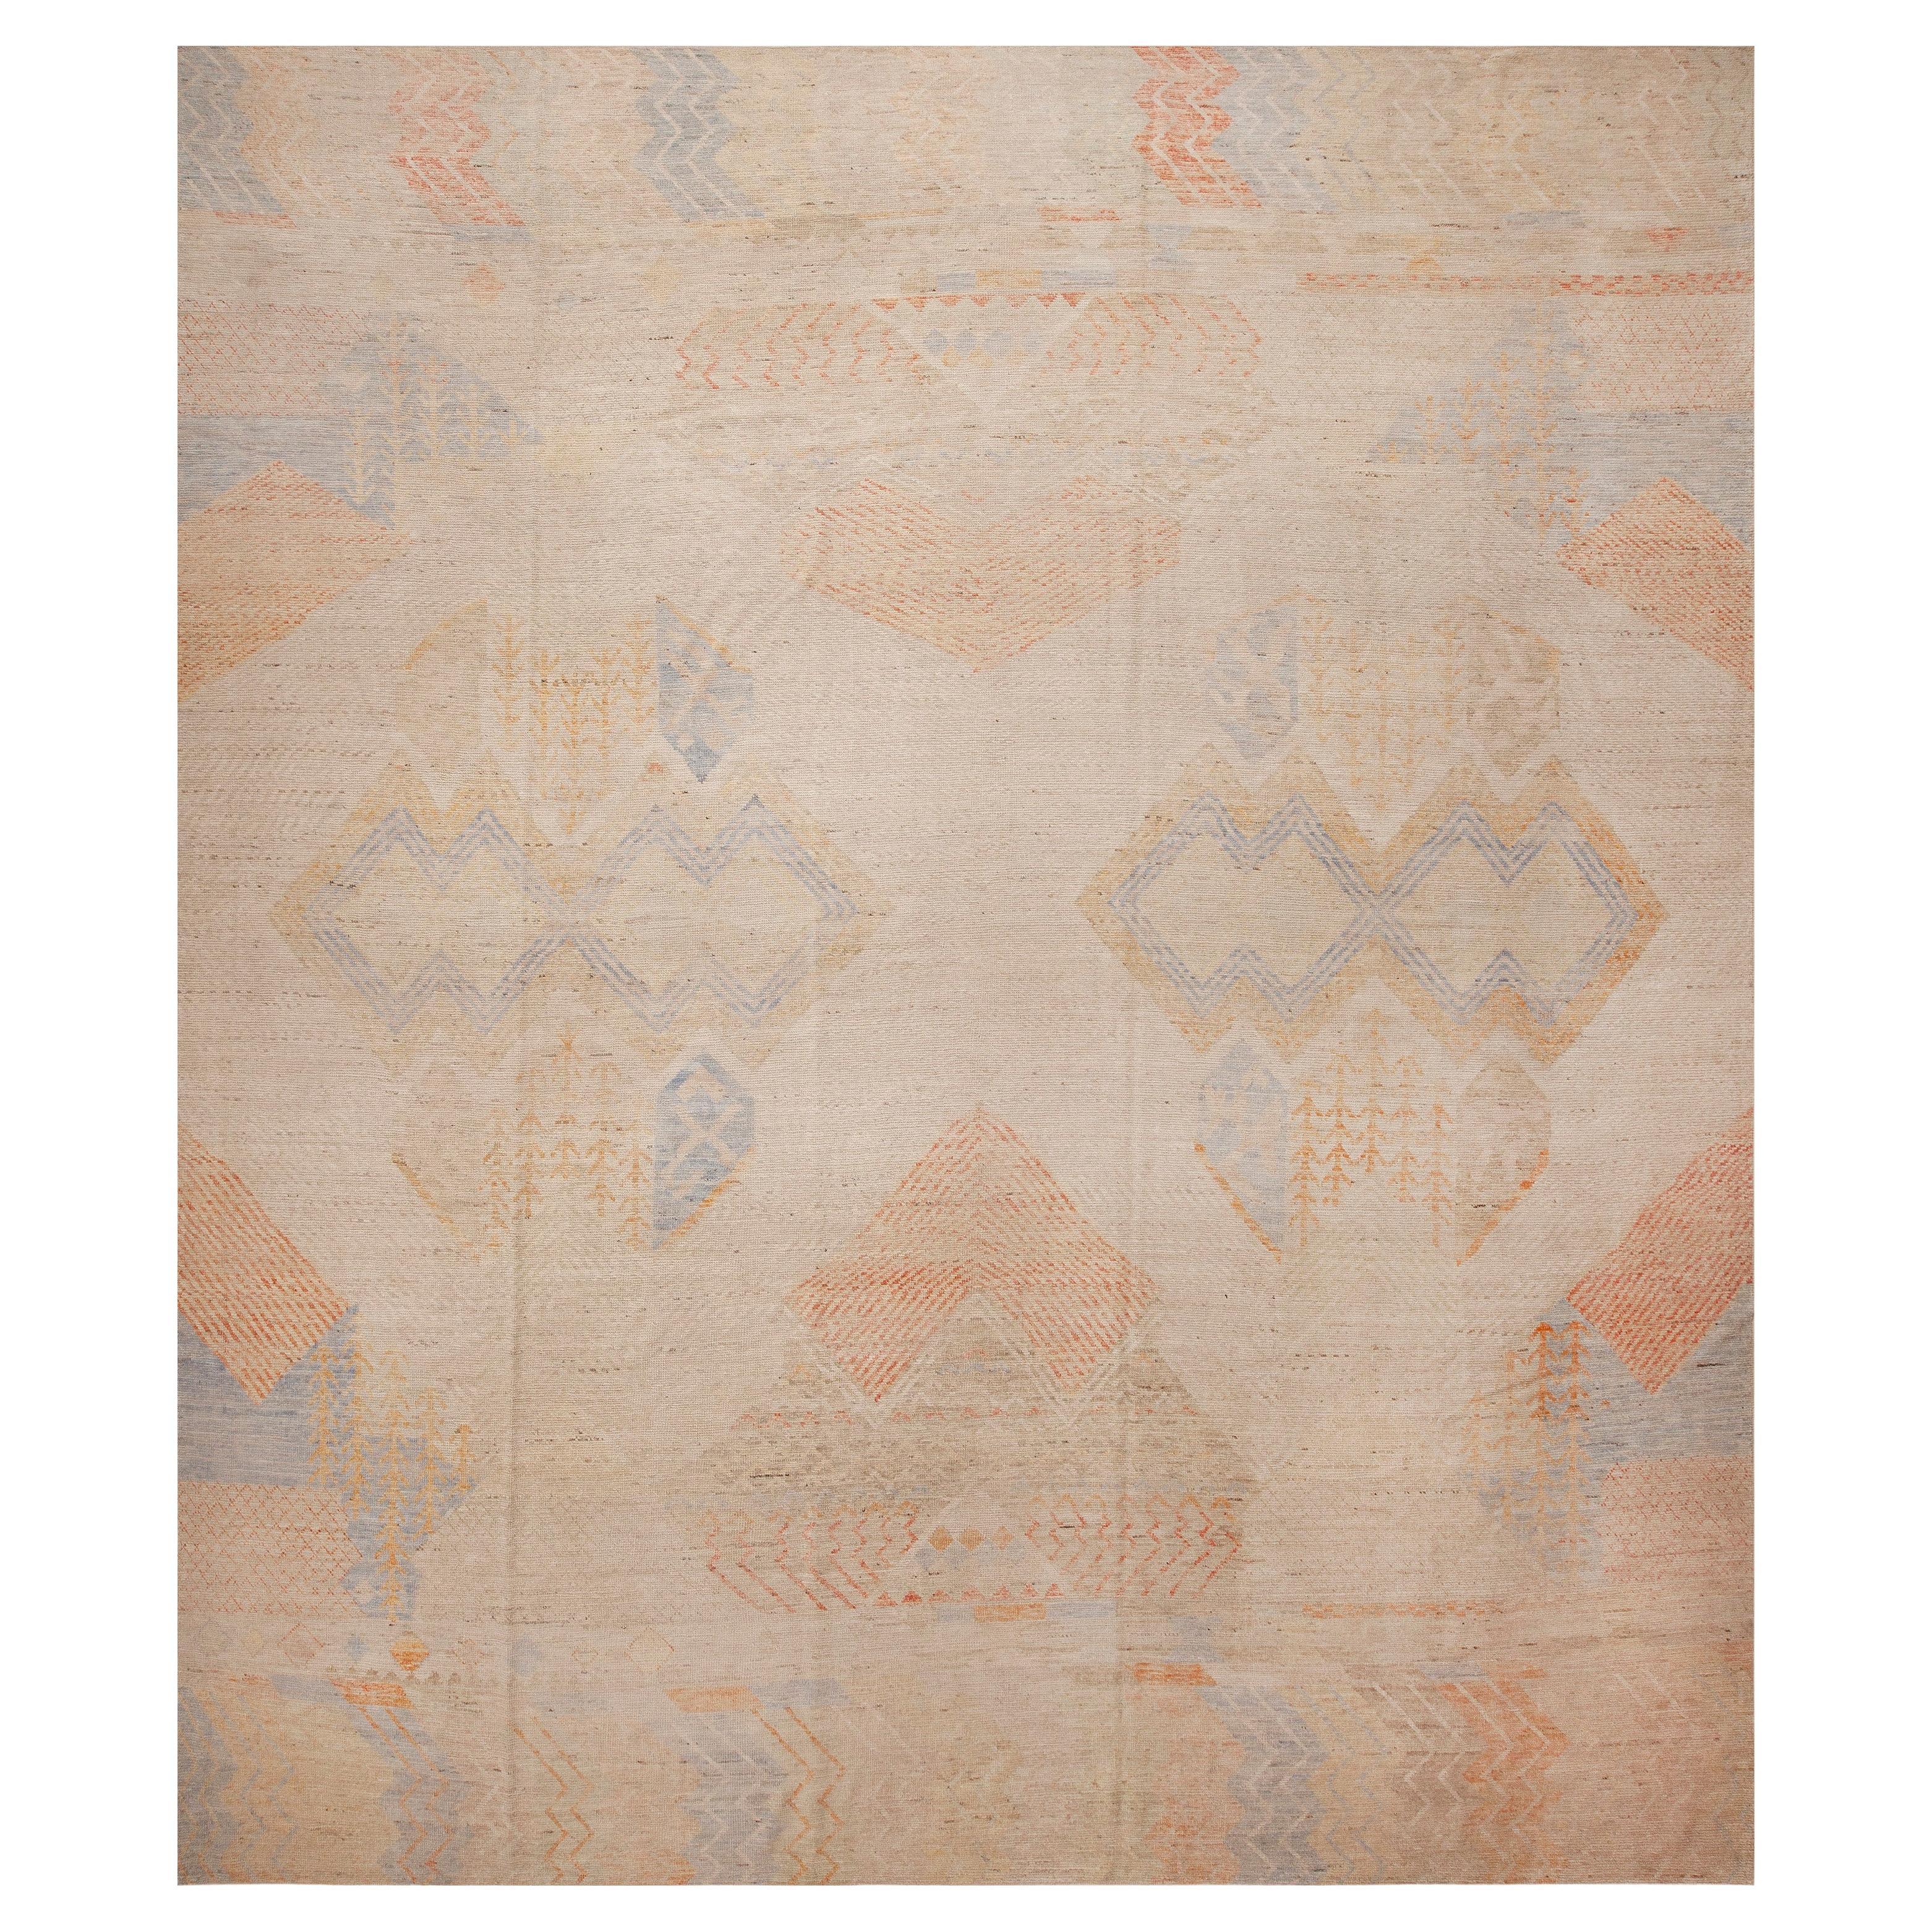 Nazmiyal Collection Rustic Tribal Geometric Design Modern Area Rug 14' x 16'2" For Sale